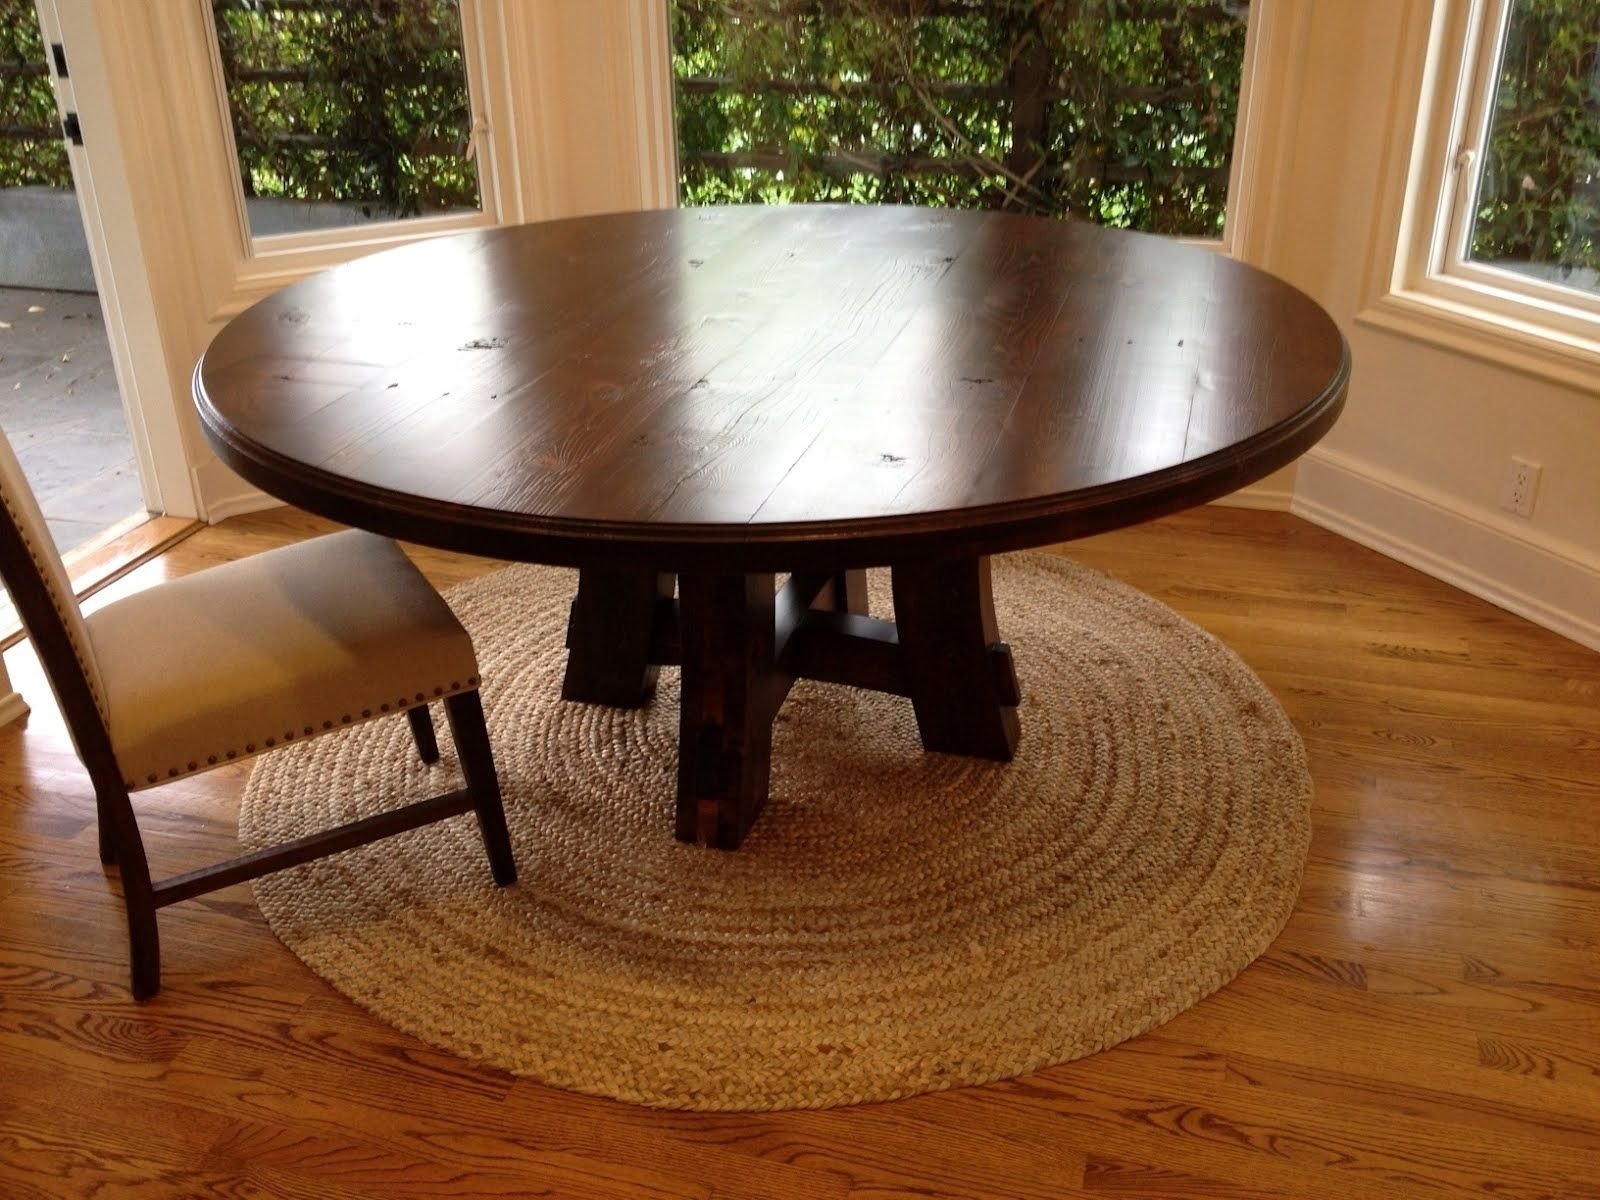 Фул стол. Что такое раунд тейбл (Round Table). Круглый деревянный стол. Круглый стол в интерьере. Круглый деревянный столик.